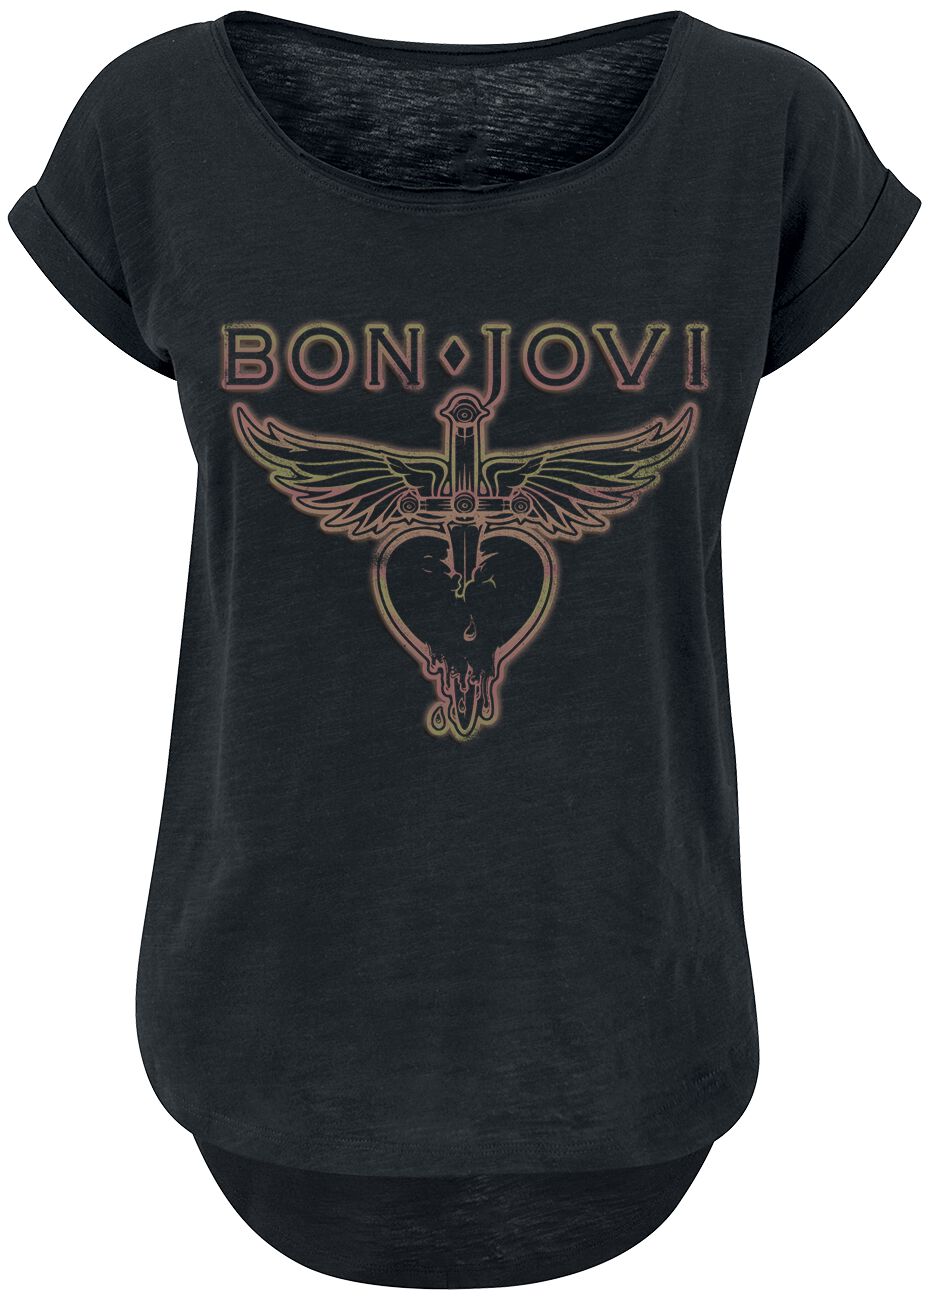 bon jovi t-shirt - heart & dagger outline - s bis 3xl - fÃ¼r damen - grÃ¶ÃŸe l - - lizenziertes merchandise! schwarz donna